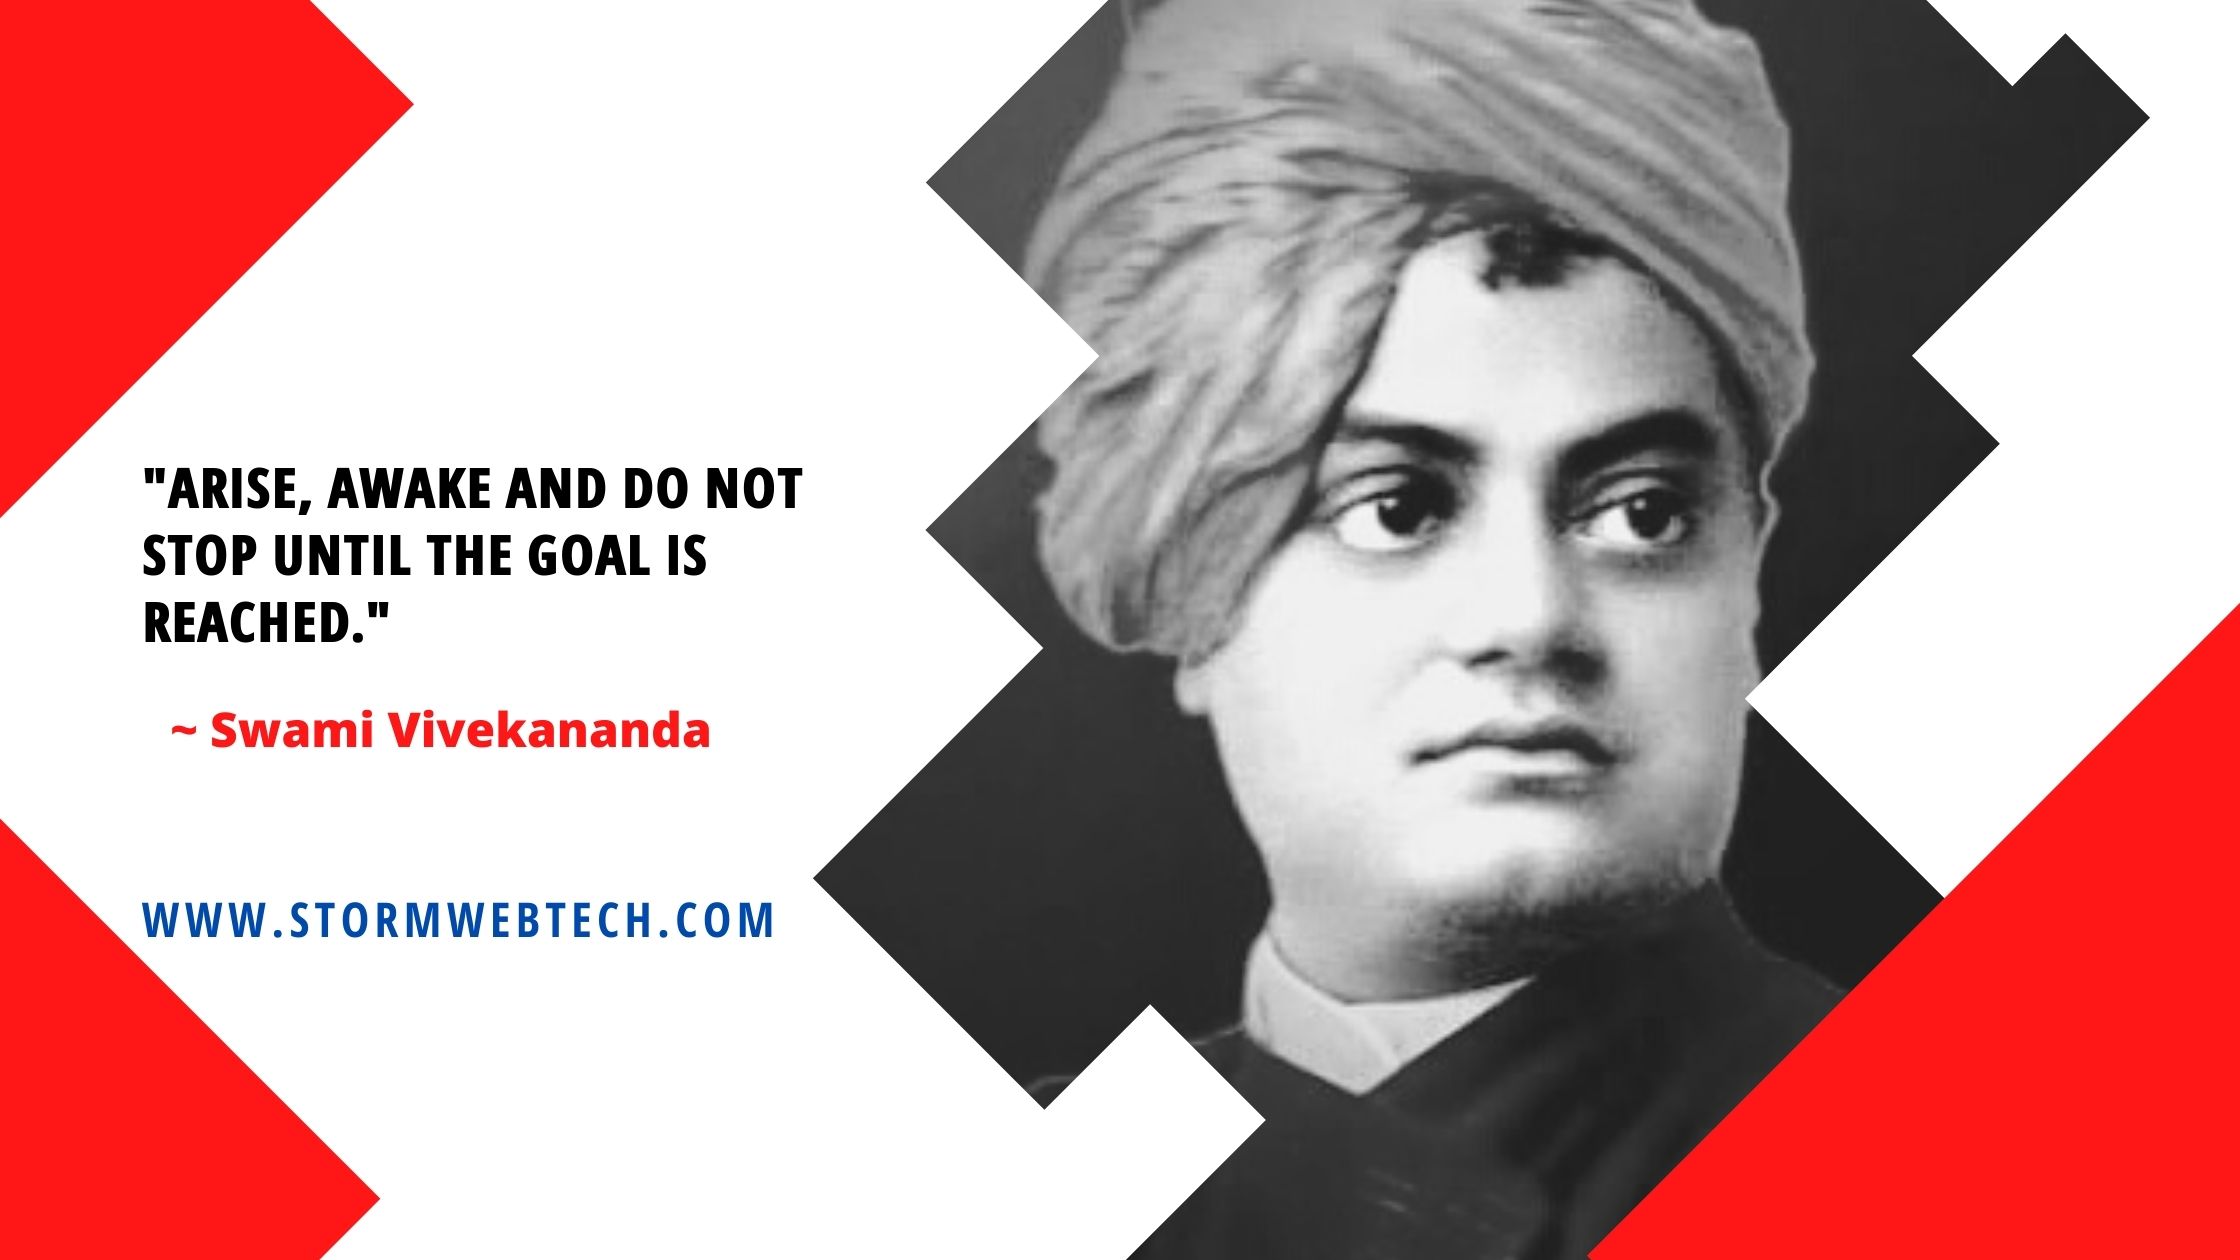 famous swami vivekananda quotes in english, swami vivekananda thoughts in english, motivational quotes by swami vivekananda in english